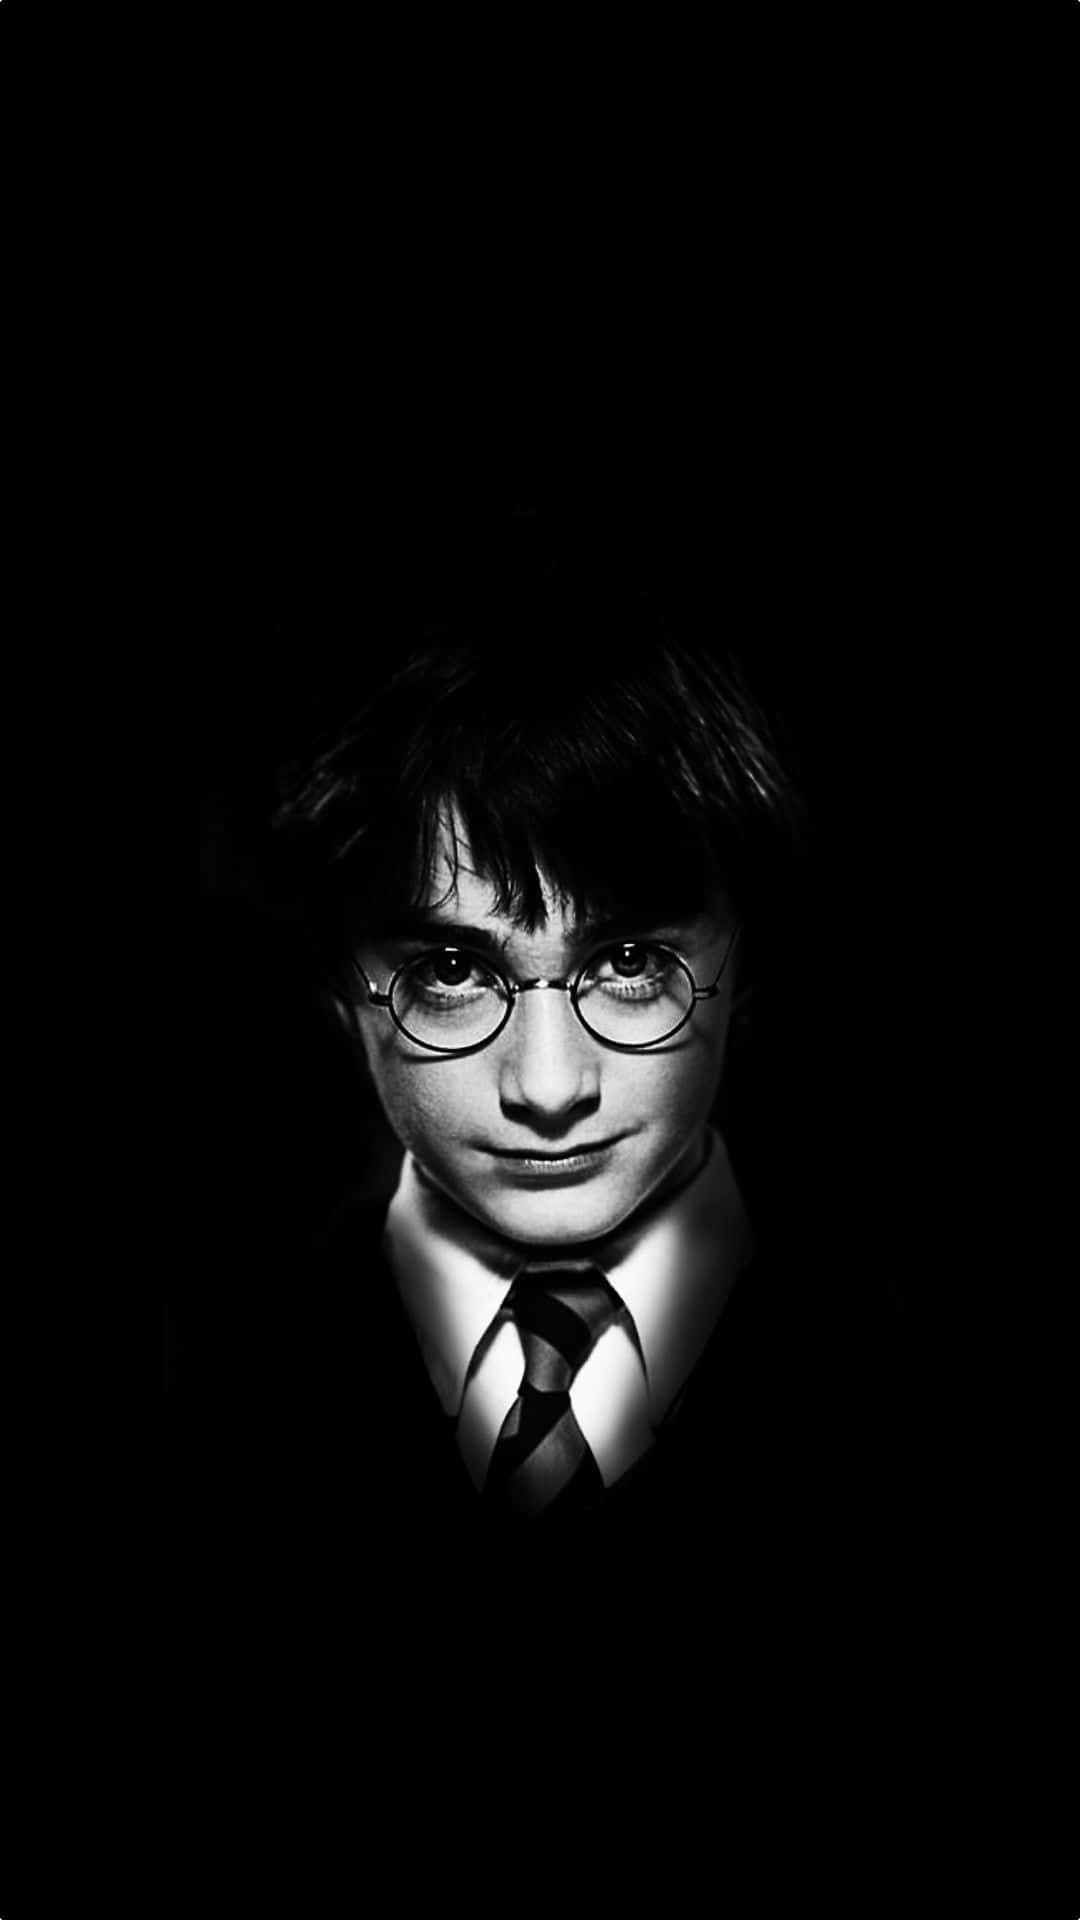 1.  "Brave Harry Potter with his trademark lightning bolt scar"